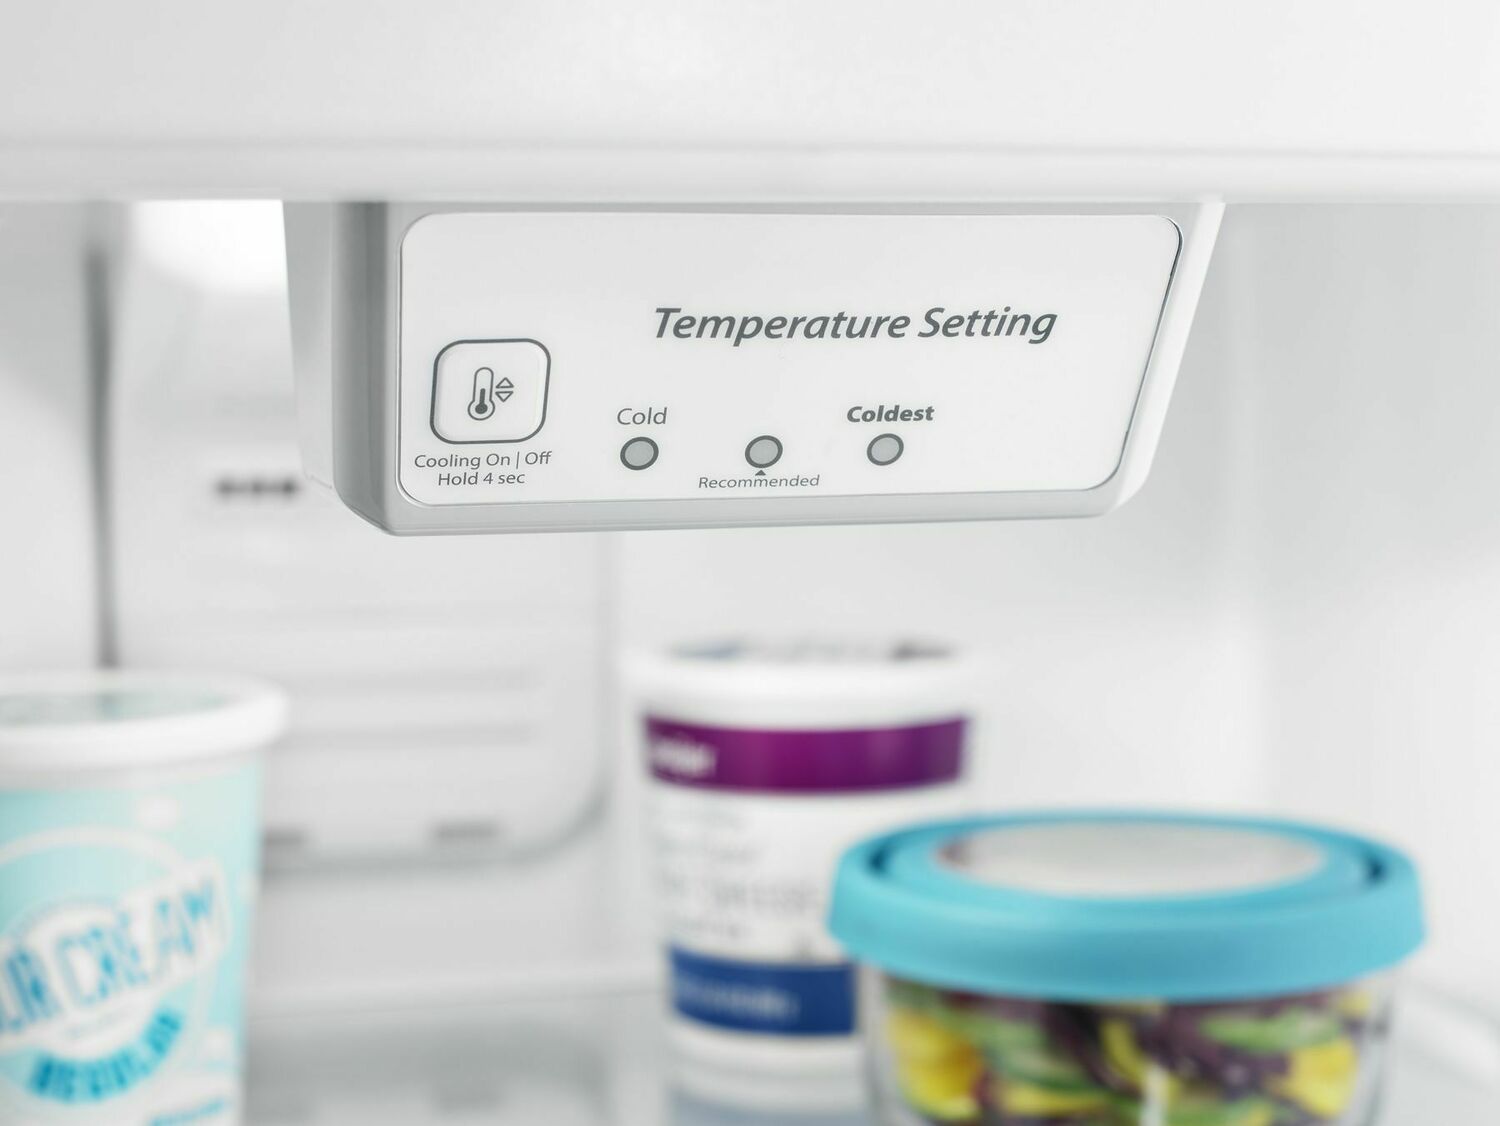 Amana ART318FFDW 30-Inch Amana® Top-Freezer Refrigerator With Glass Shelves - White